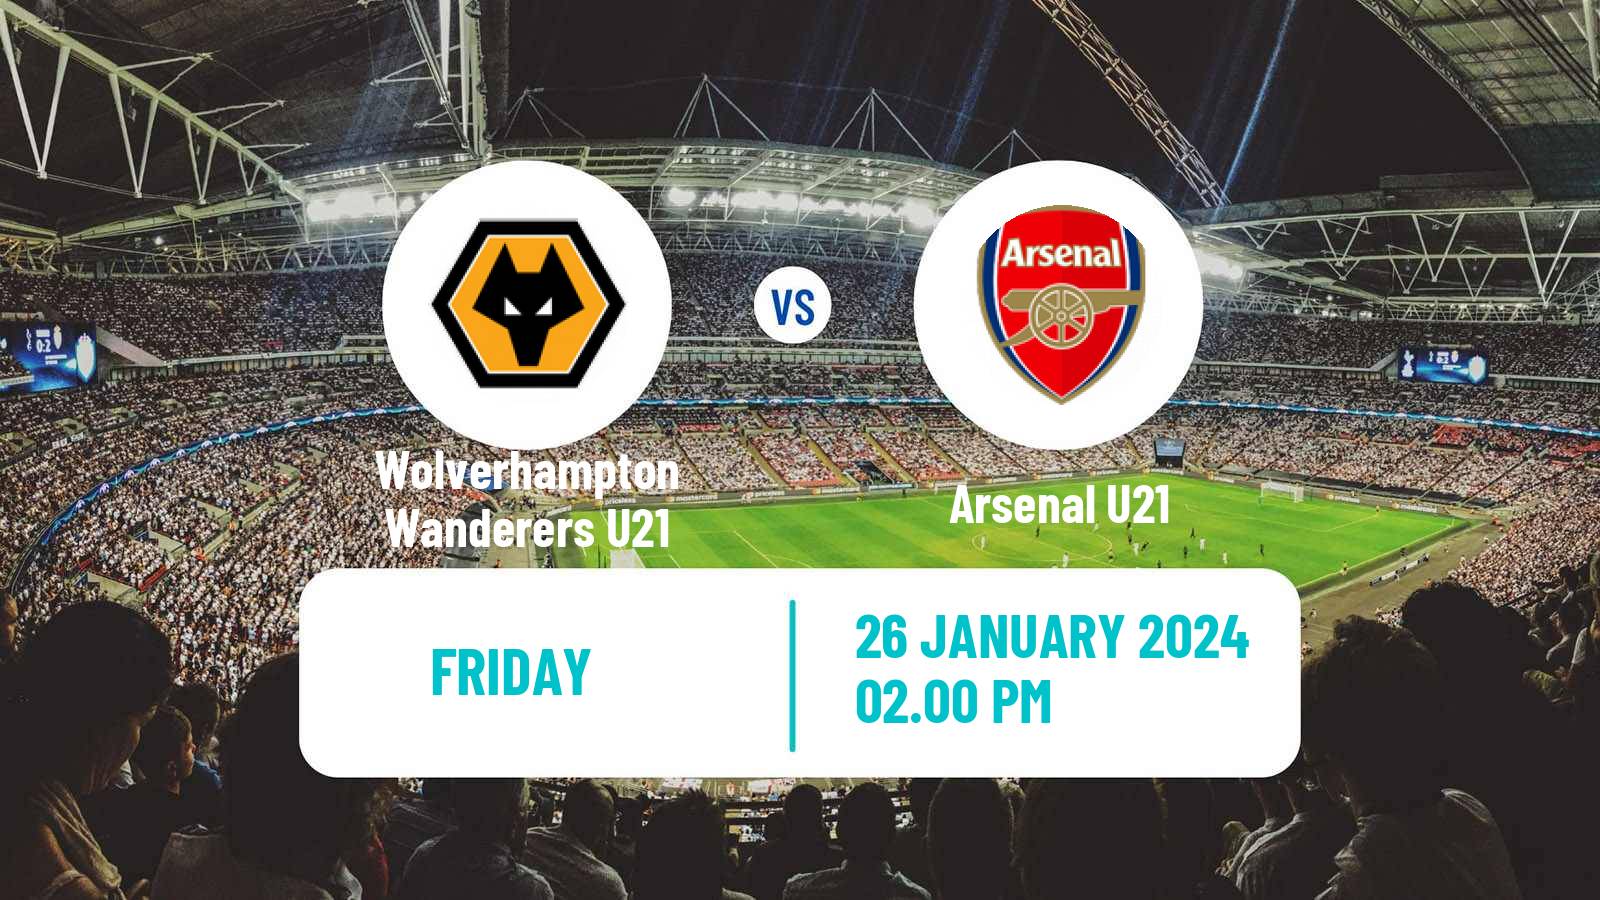 Soccer English Premier League 2 Wolverhampton Wanderers U21 - Arsenal U21